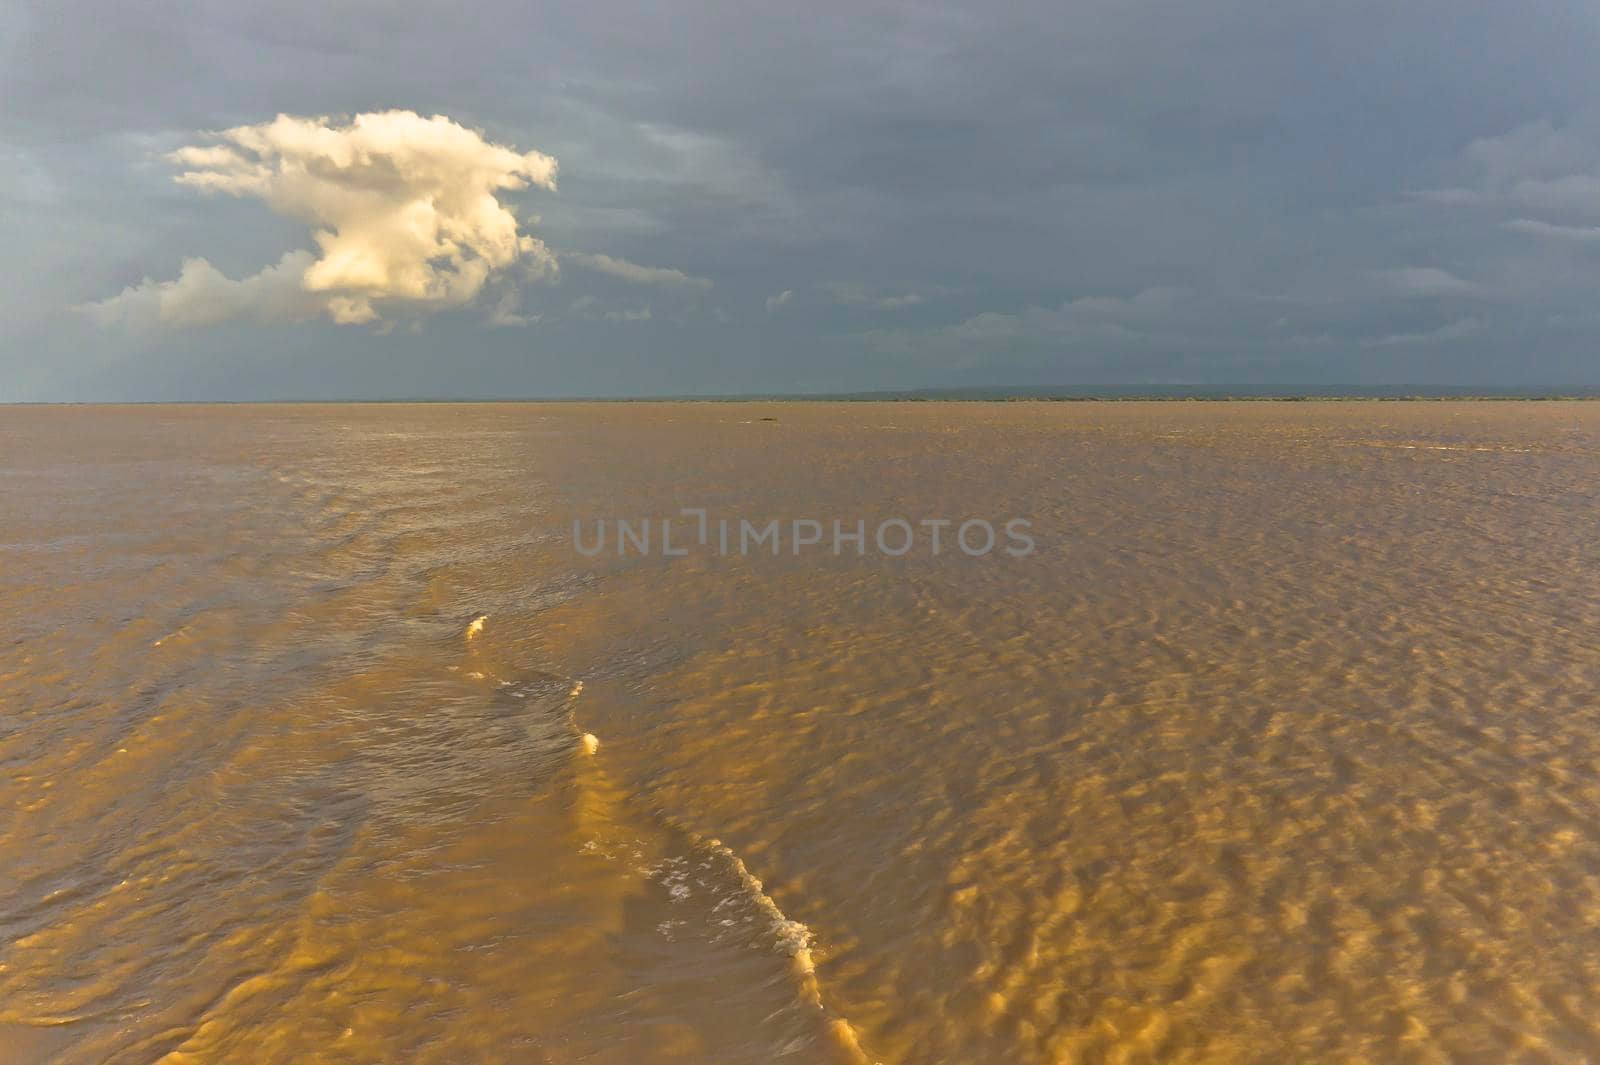 Amazon river, Sunset view, Brazil, South America by giannakisphoto